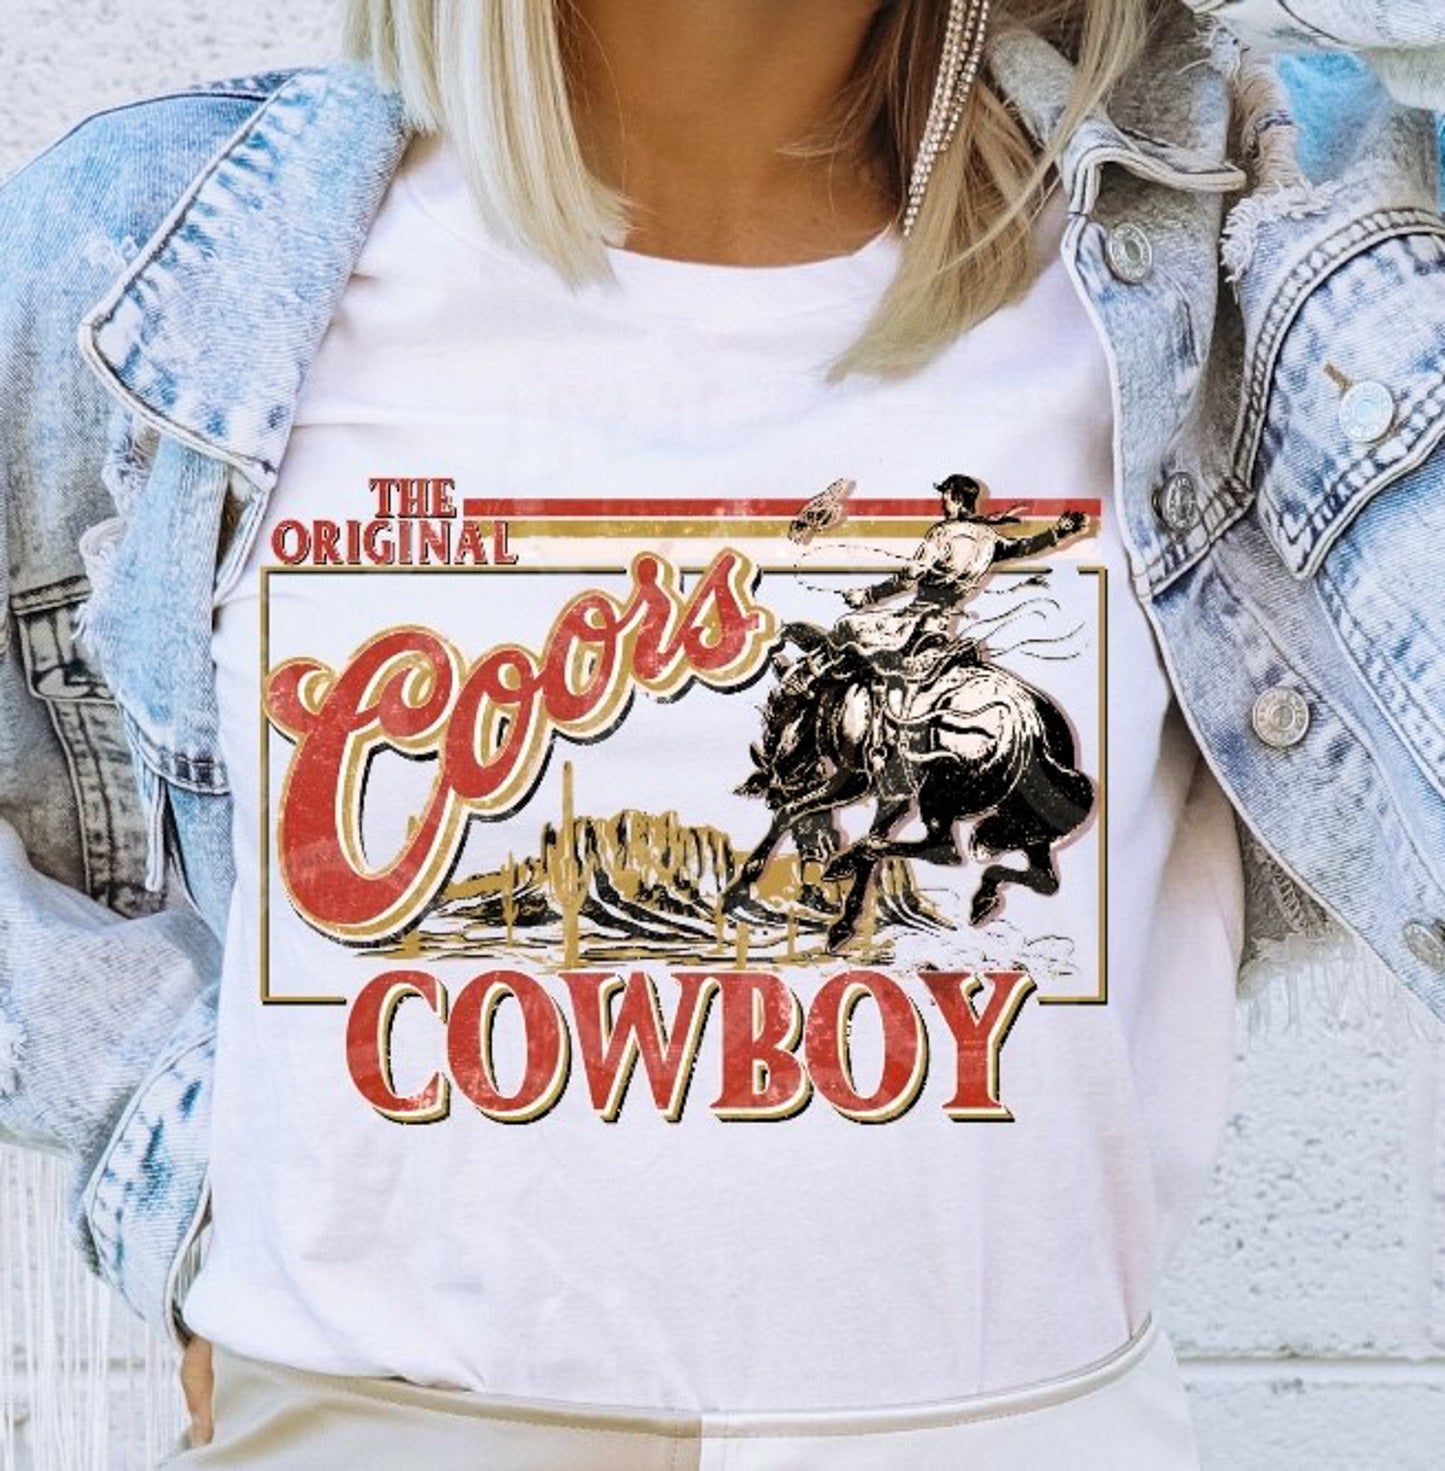 The Original Coors Cowboy Tee